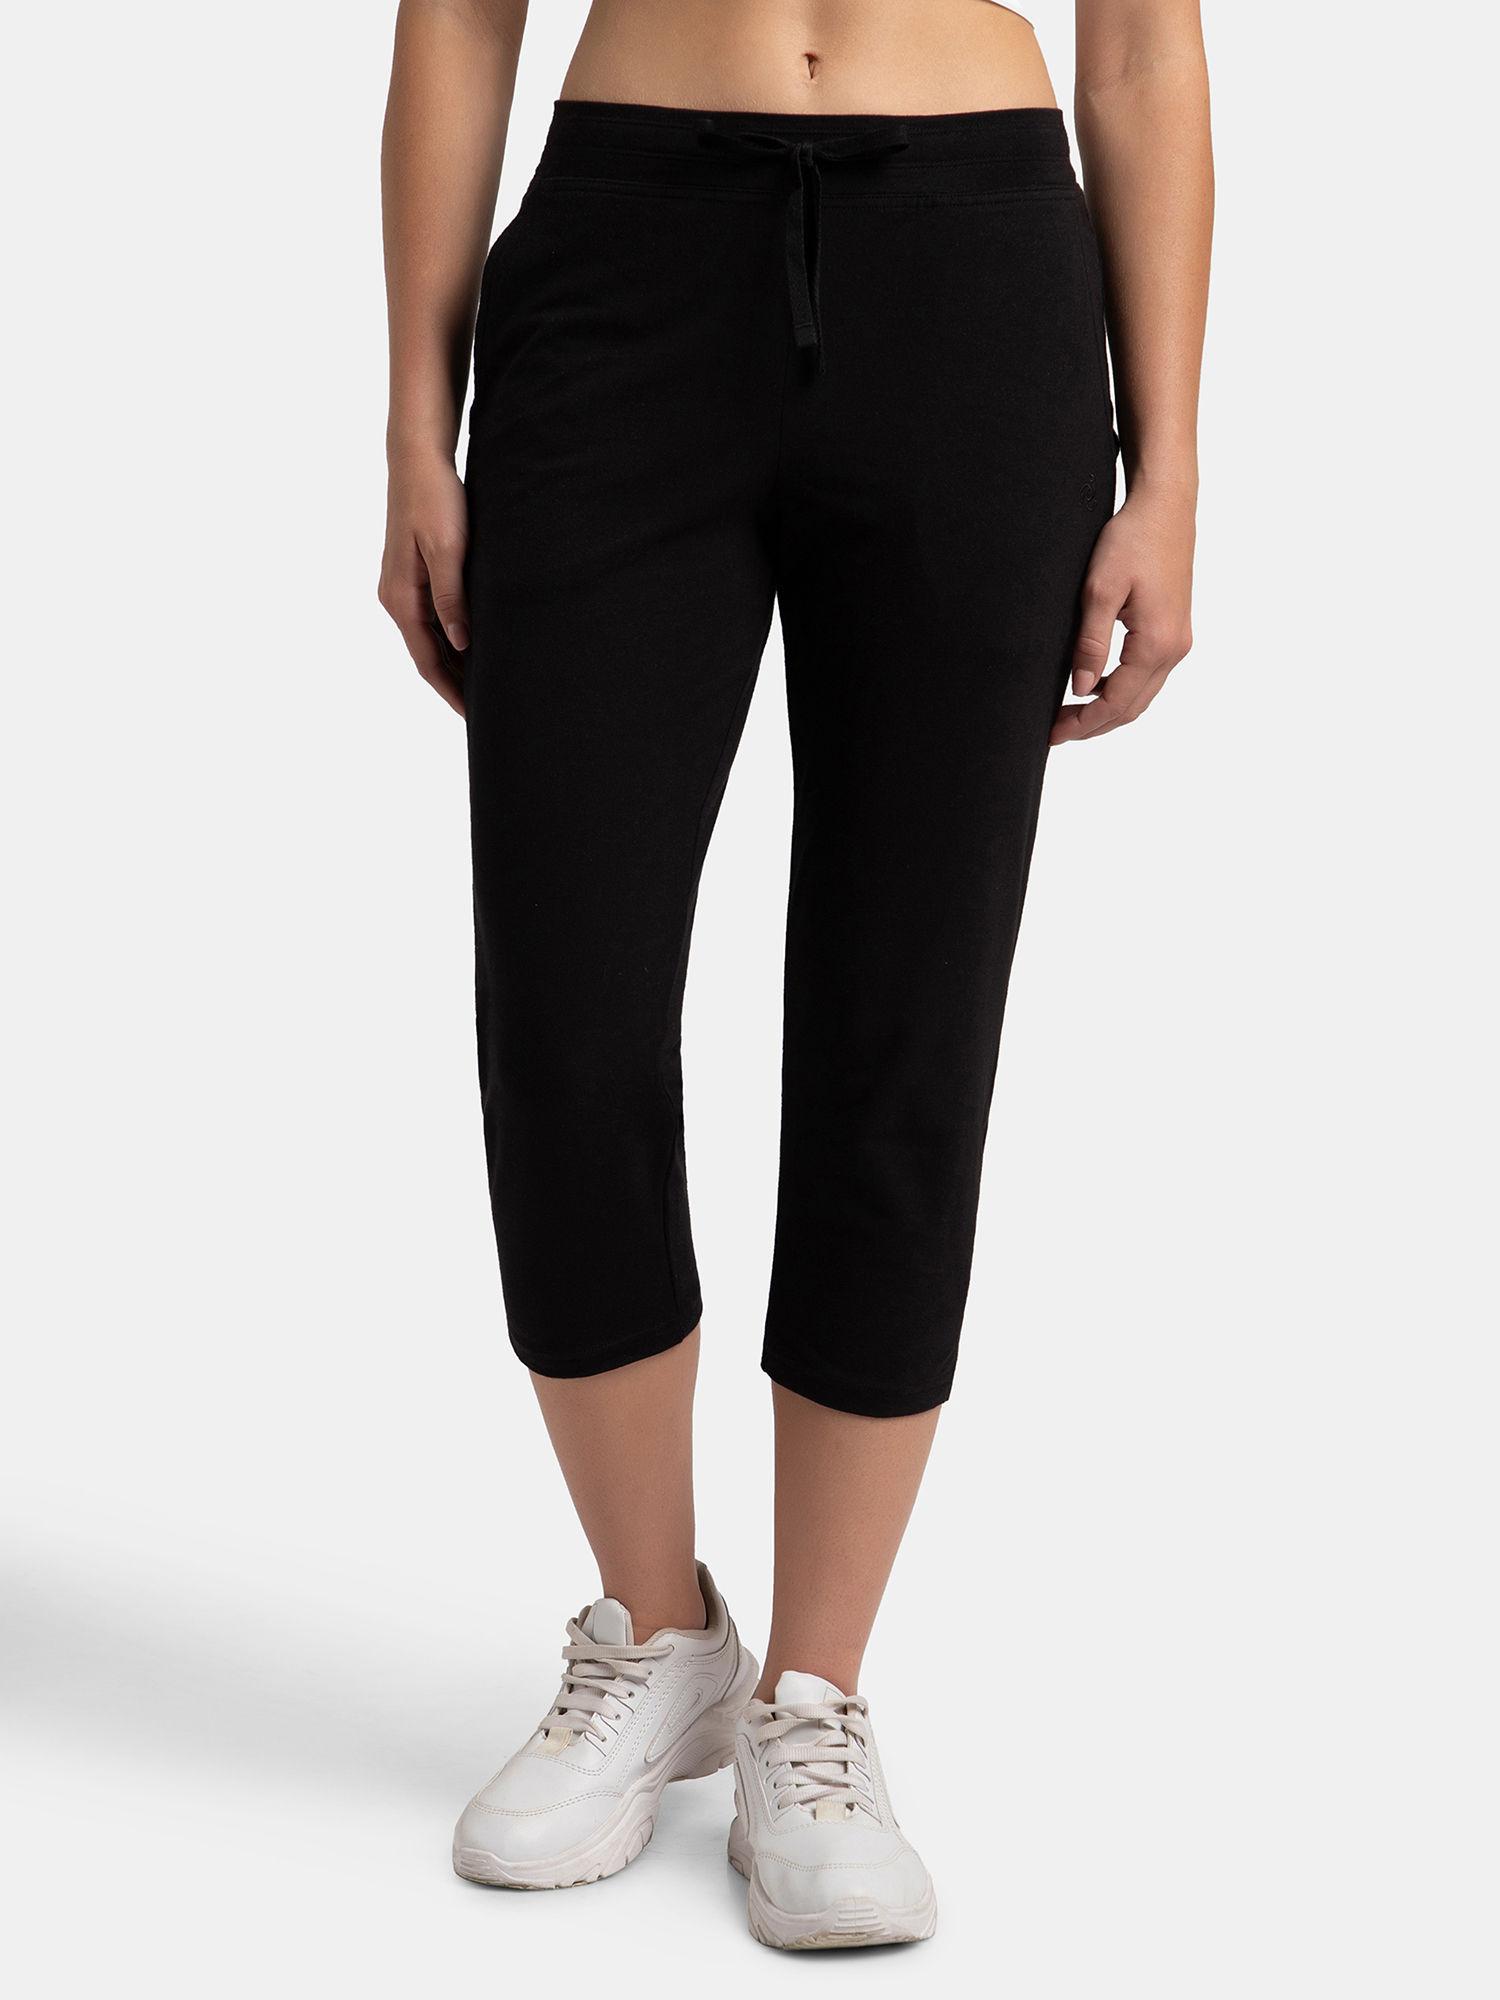 black capri pants - style number - 1300